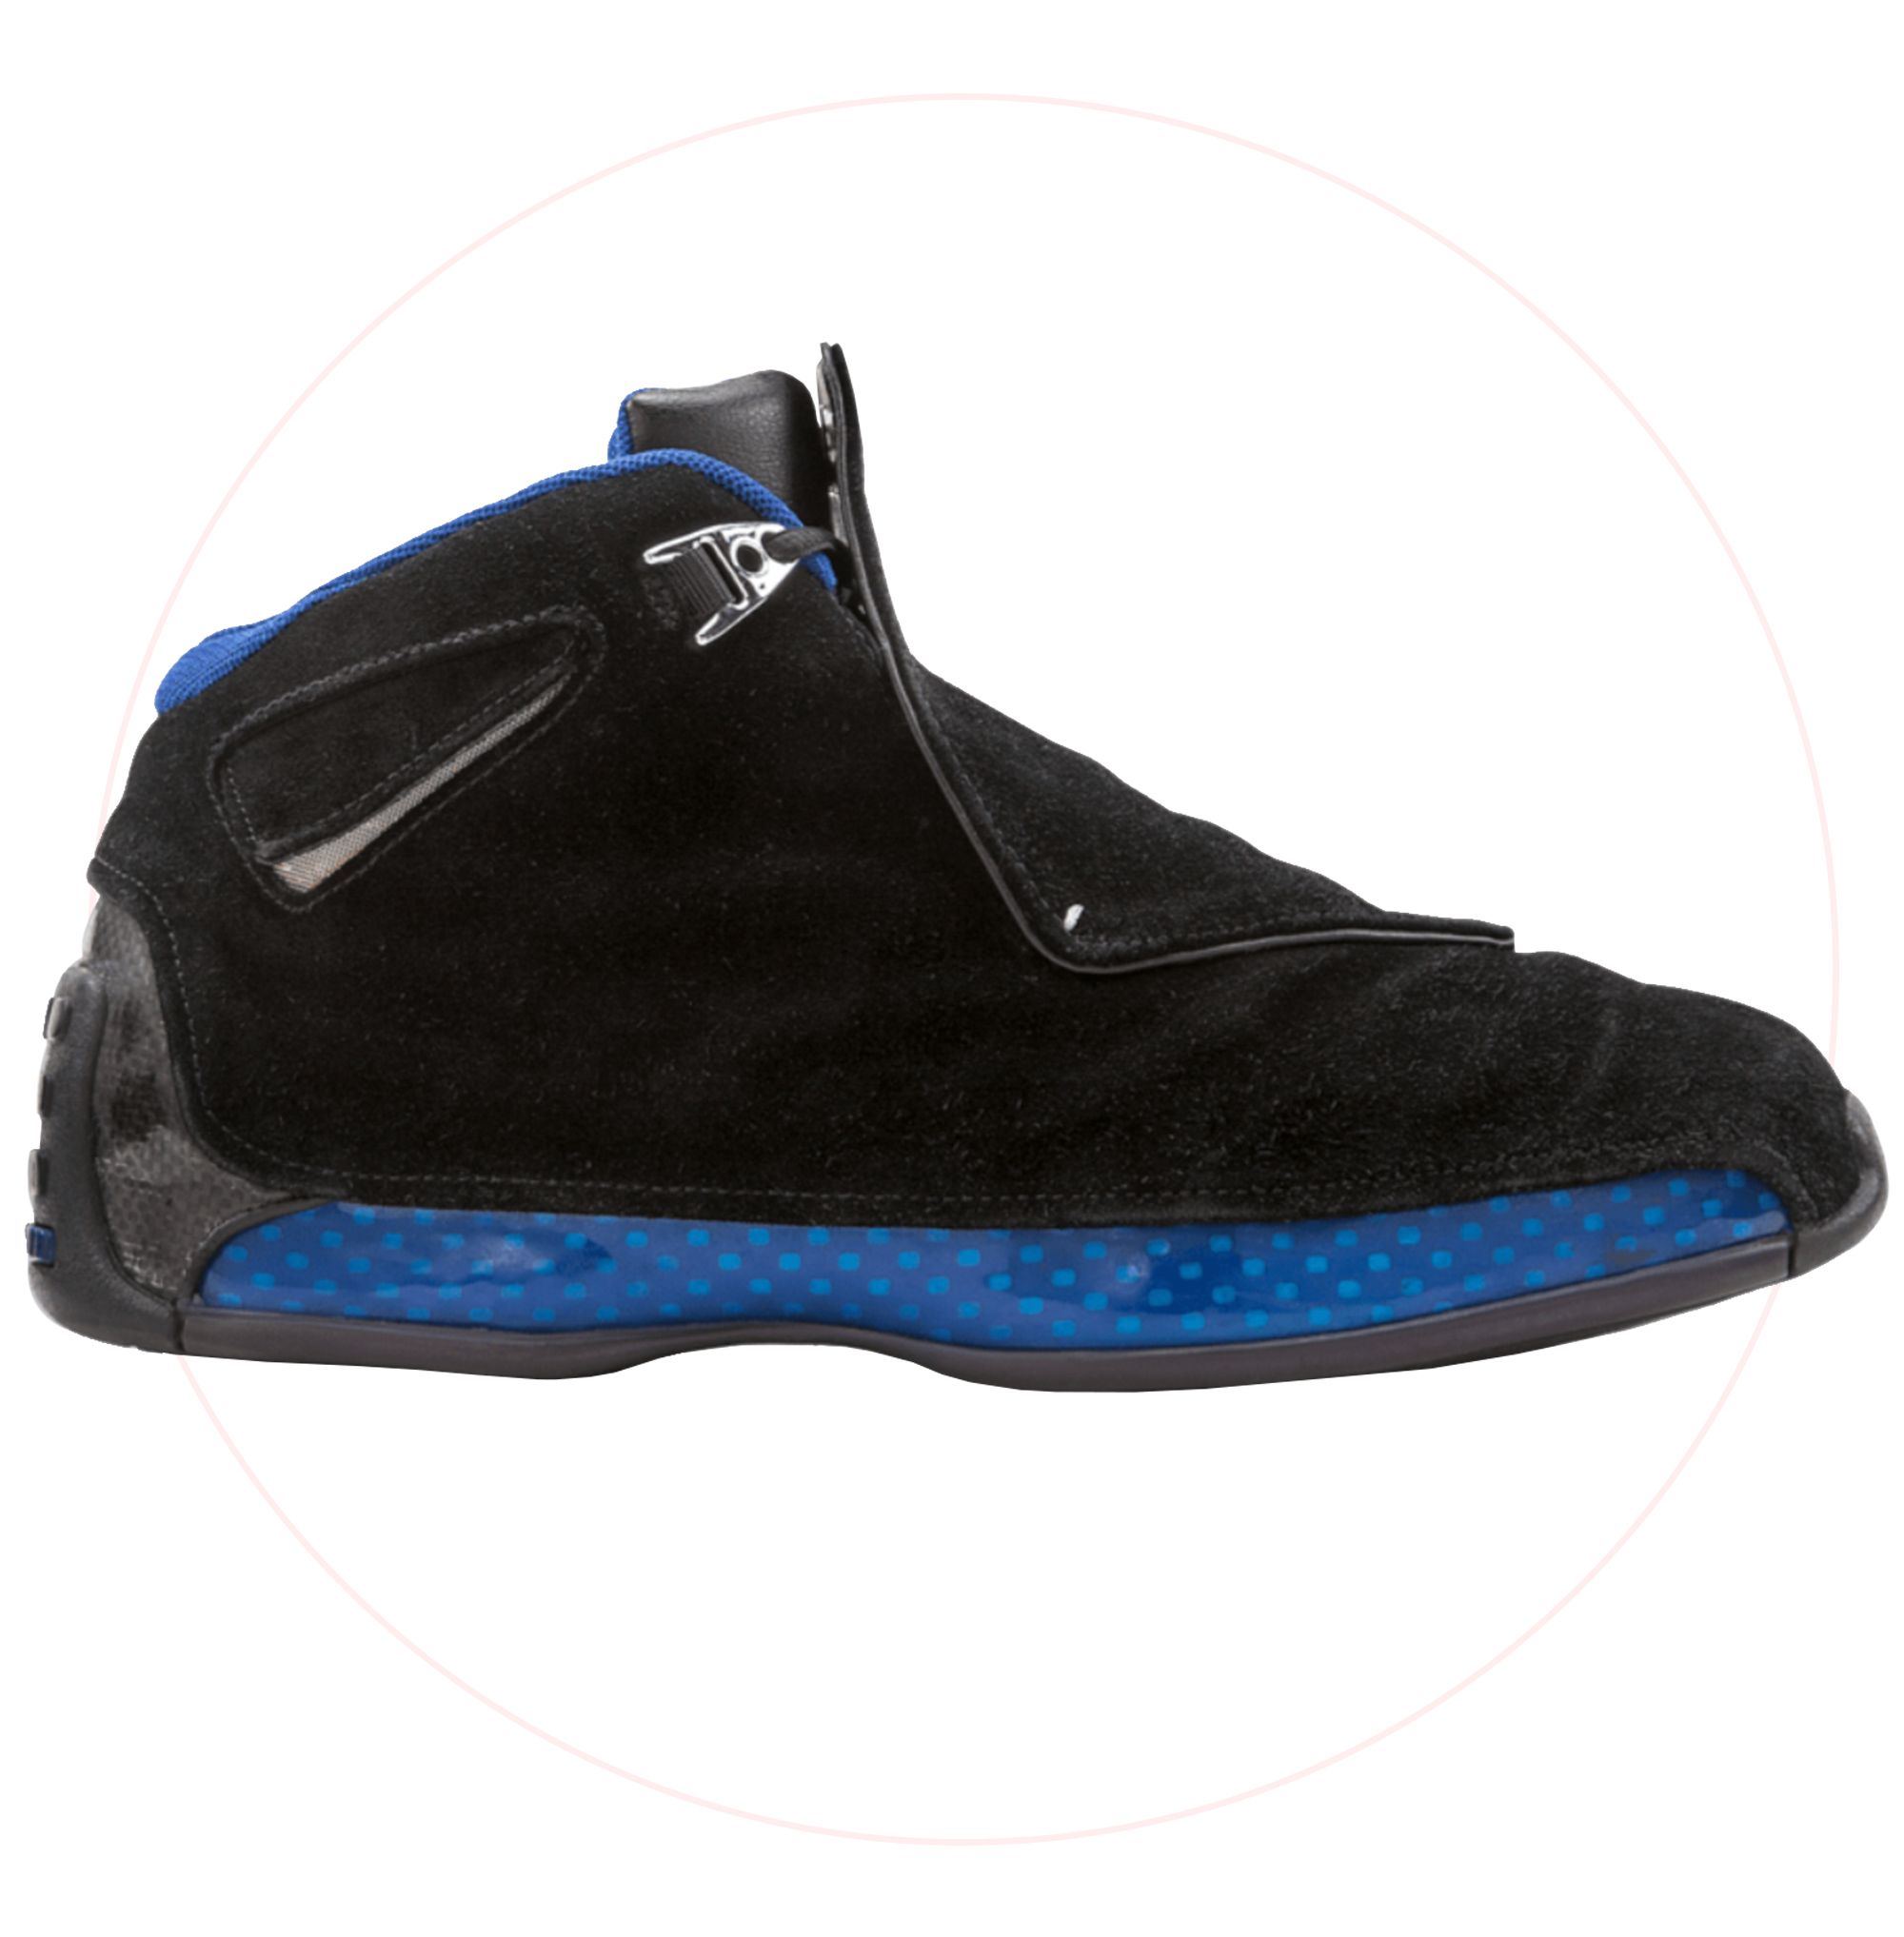 Nike Air Jordan 1 Low True Blue Grey White Shoes Men 553558-412 (GS)  553560-412 | eBay